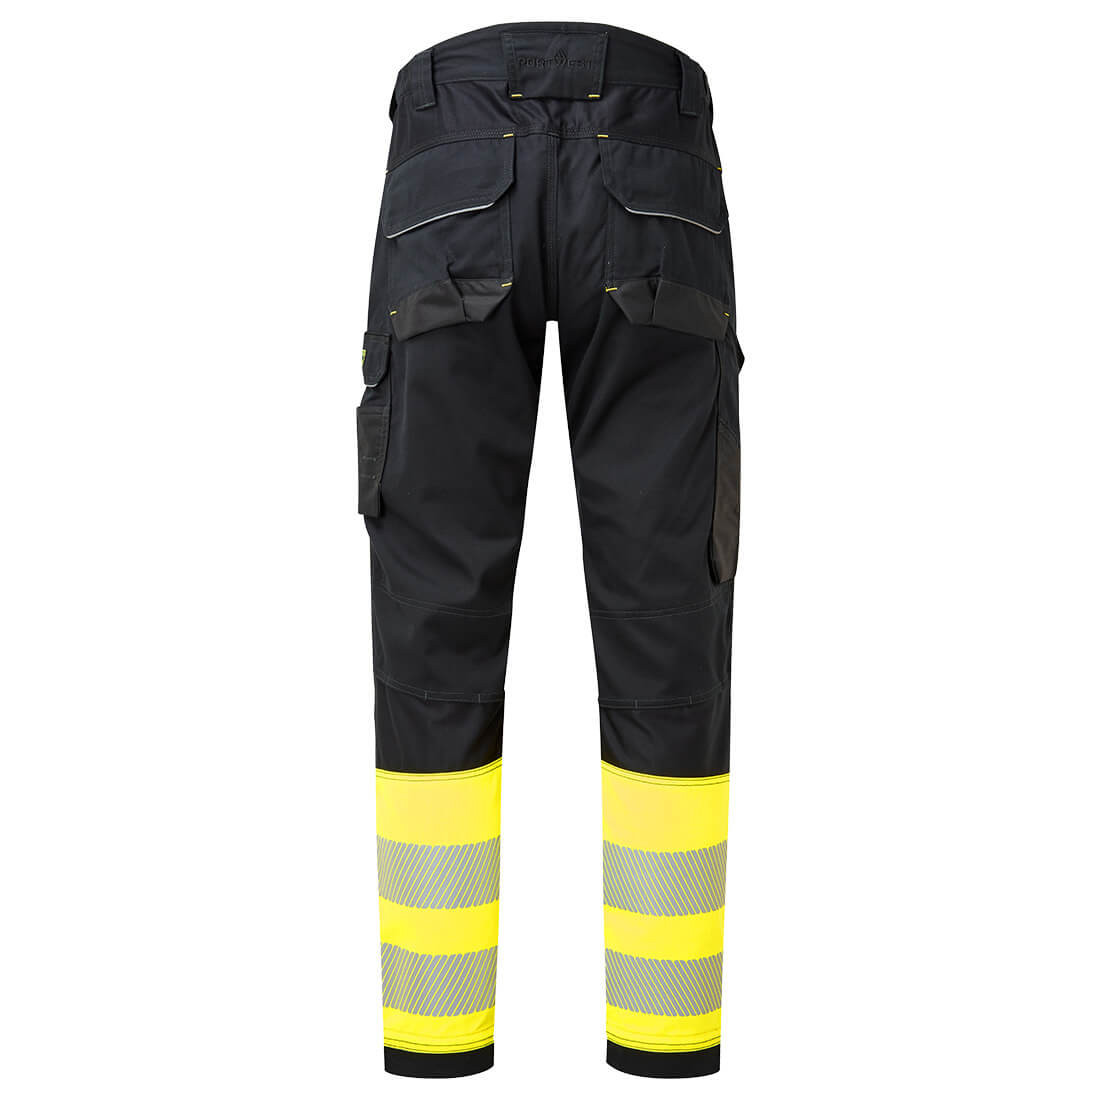 Pantaloni PW3 HiVis ignifugi Clasa 1, cu buzunare Holster - Imbracaminte de protectie